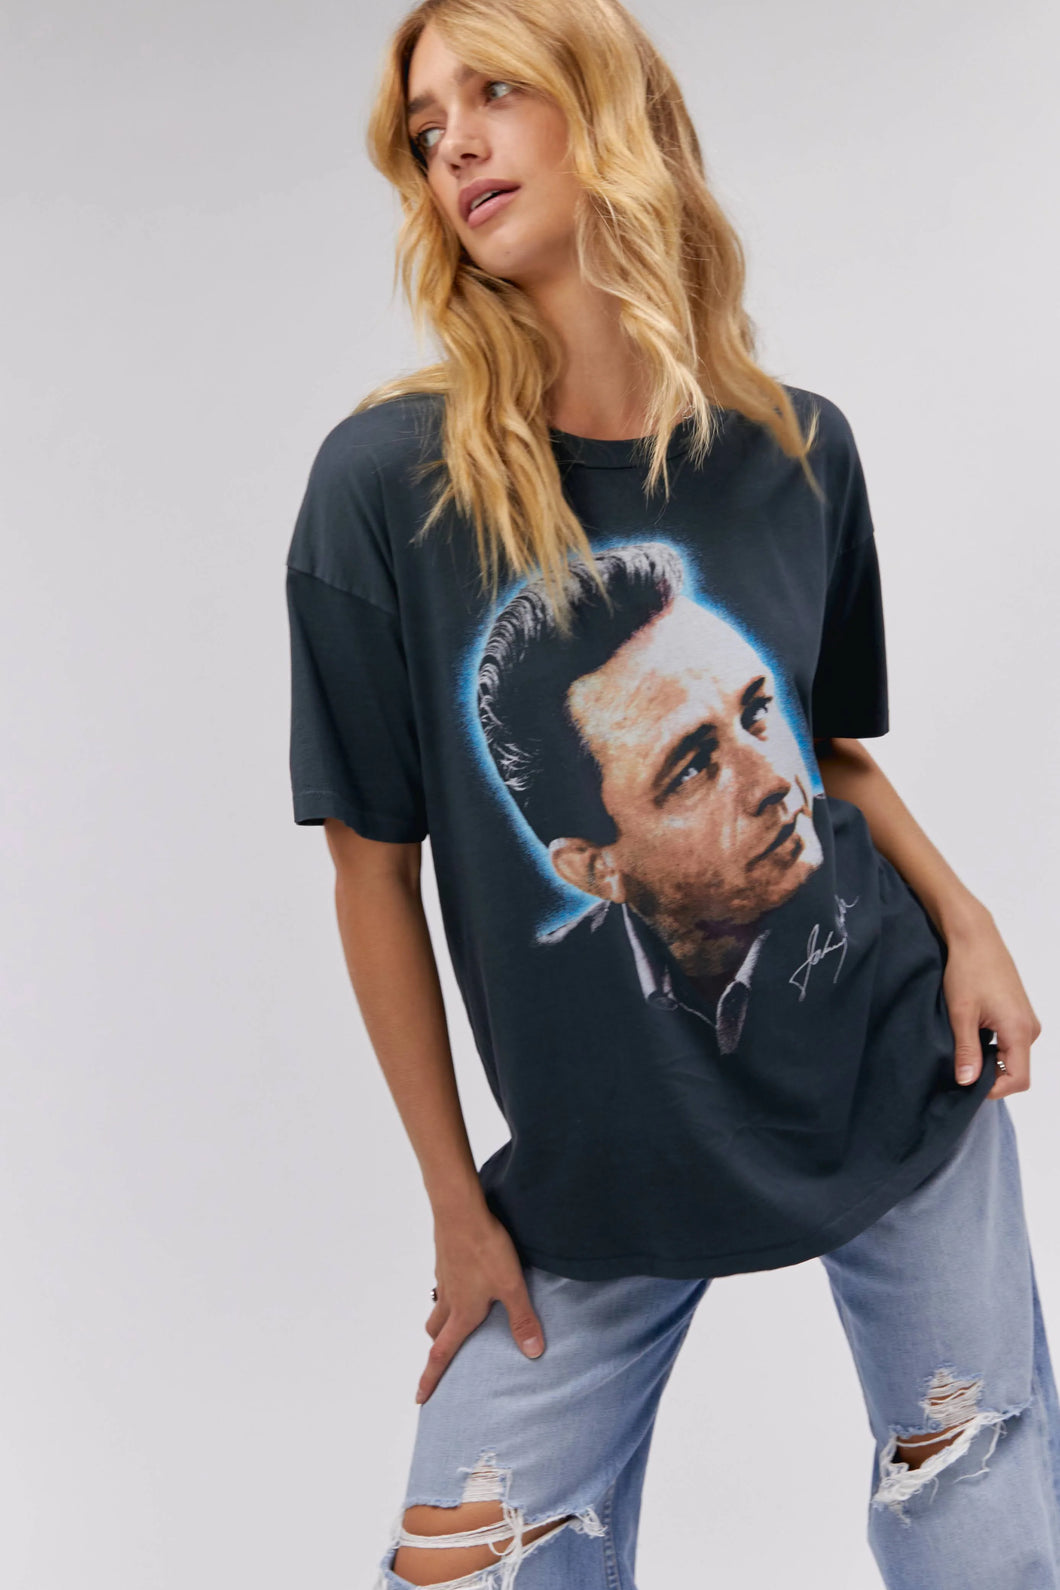 Daydreamer Johnny Cash Portrait Tee